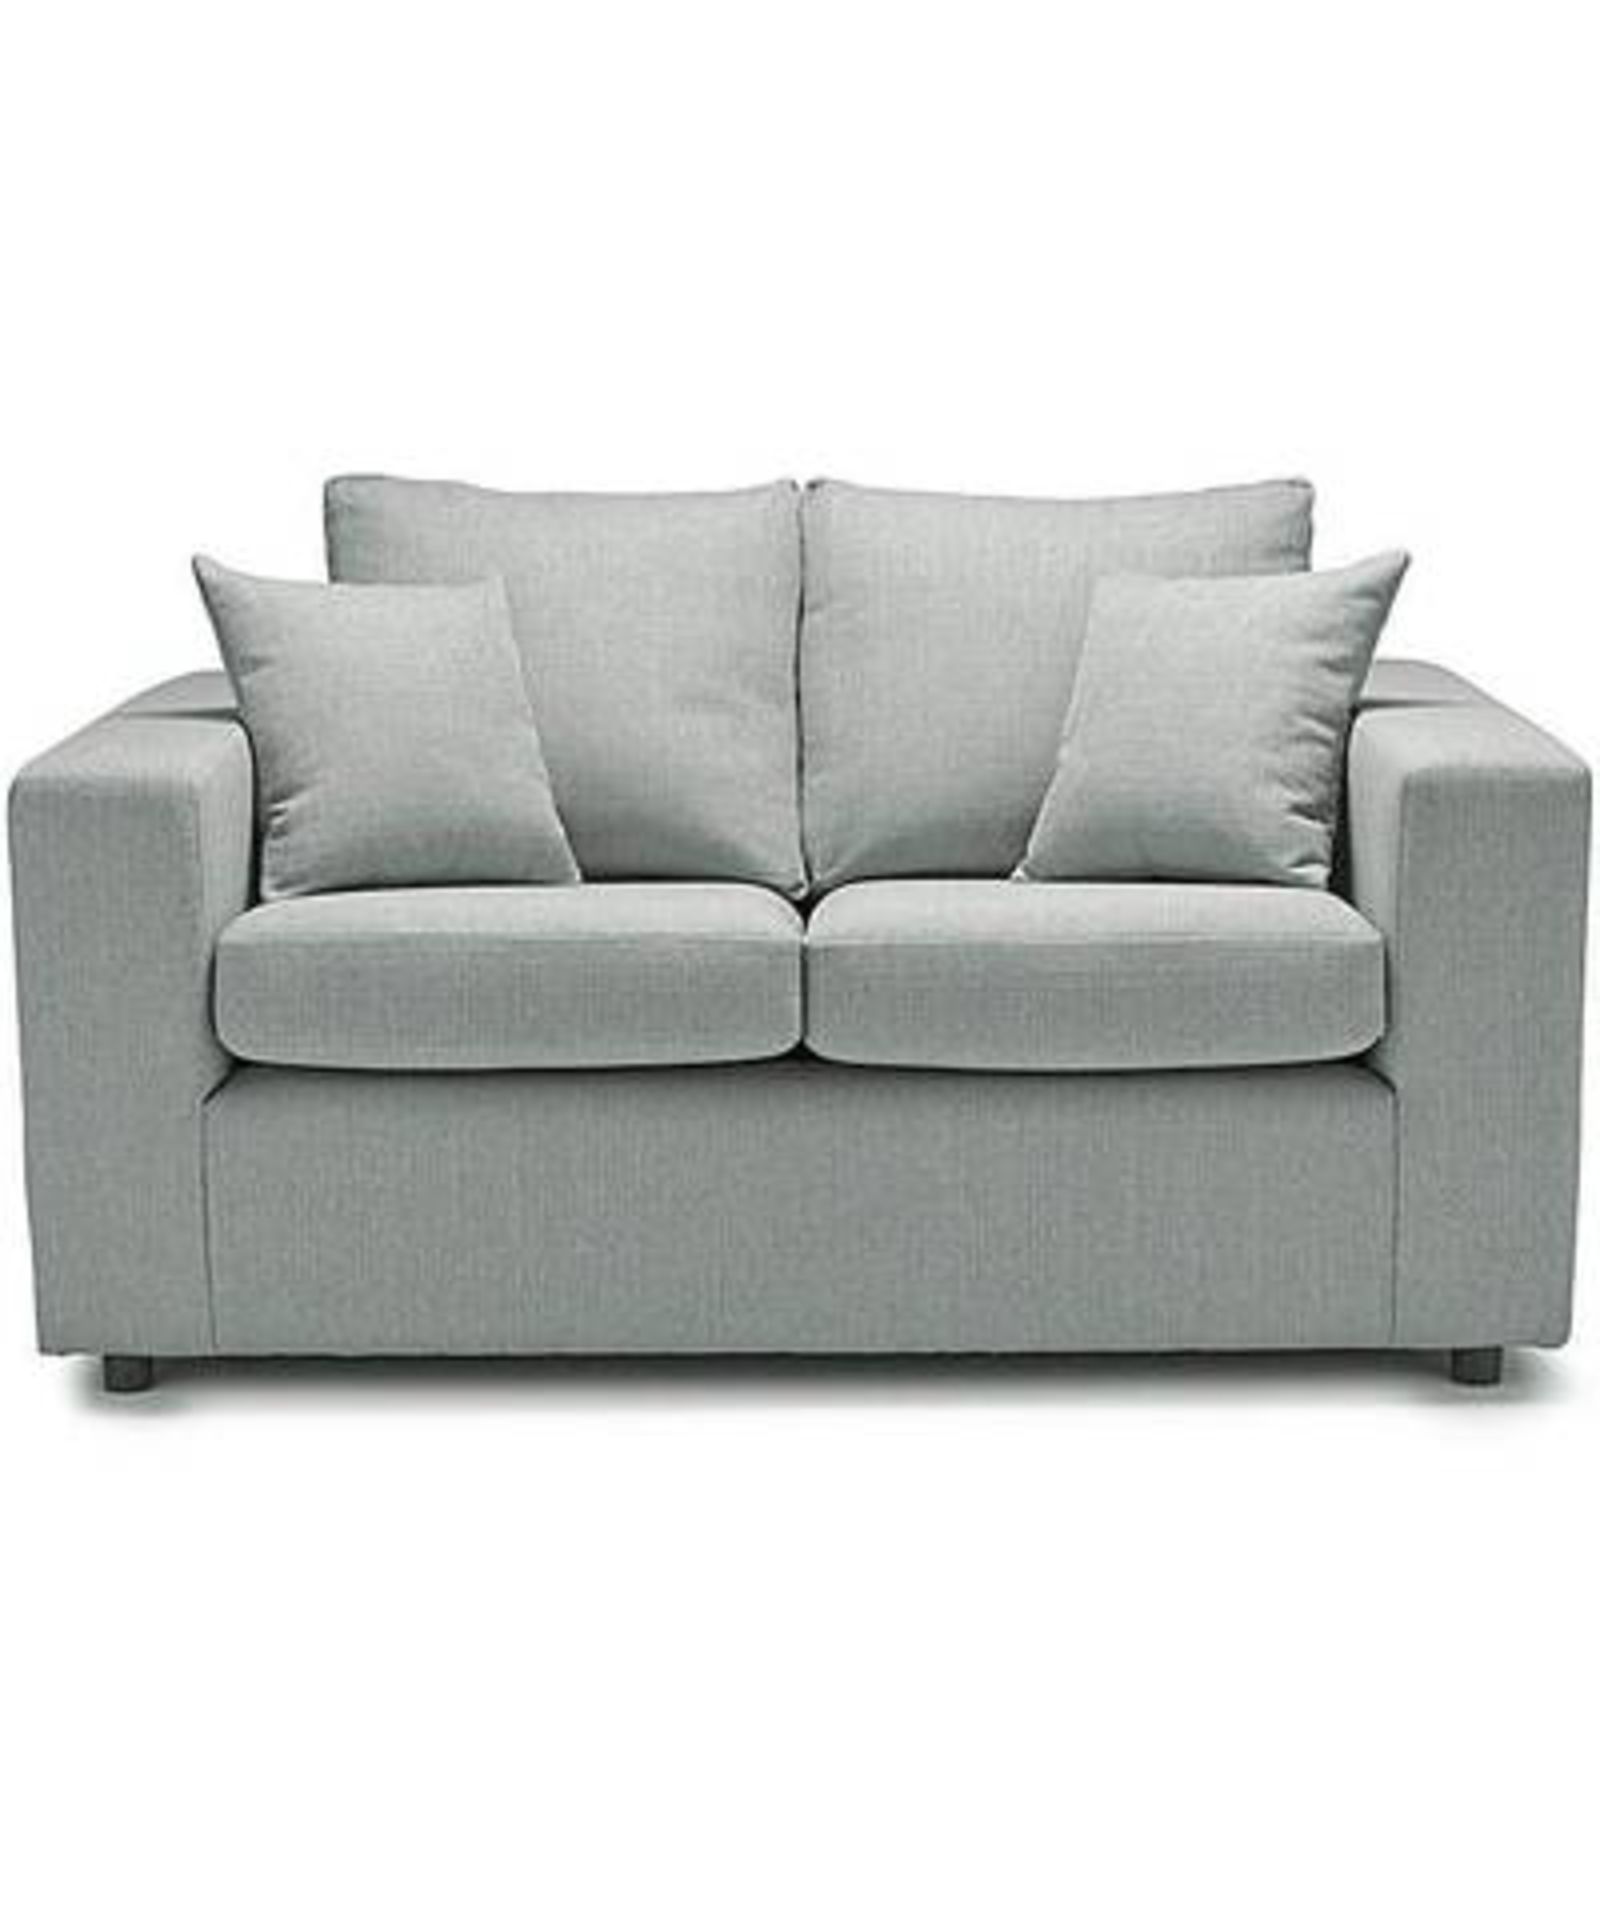 (P) RRP £251. Alicante 2 Seater Sofa Grey (QF2481/01). Approx W160x D83cm